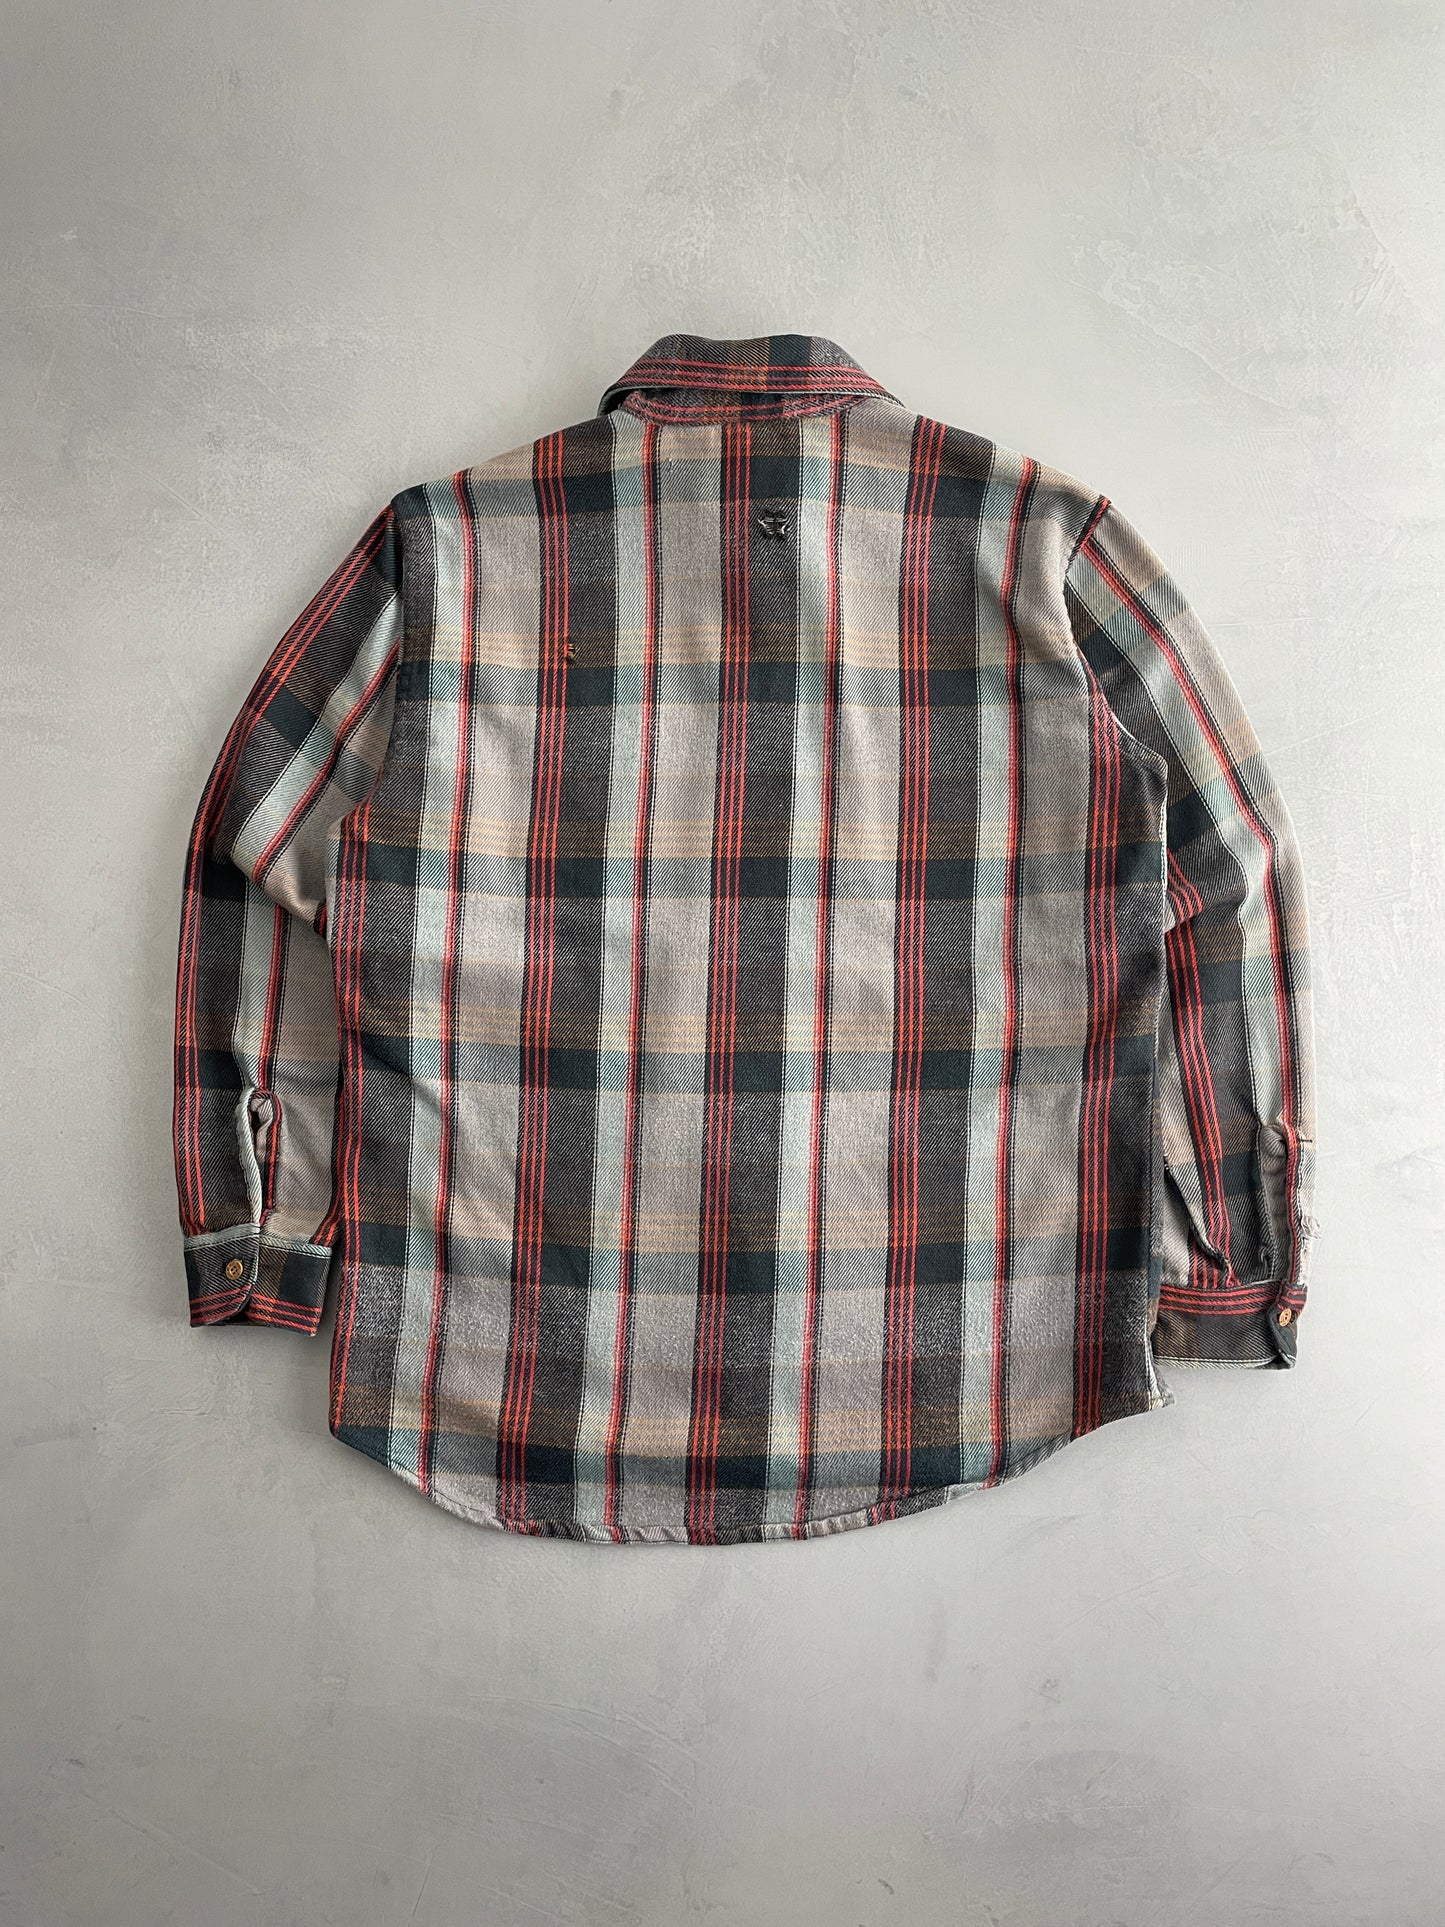 70's Big Mac Flannel Shirt [XL]